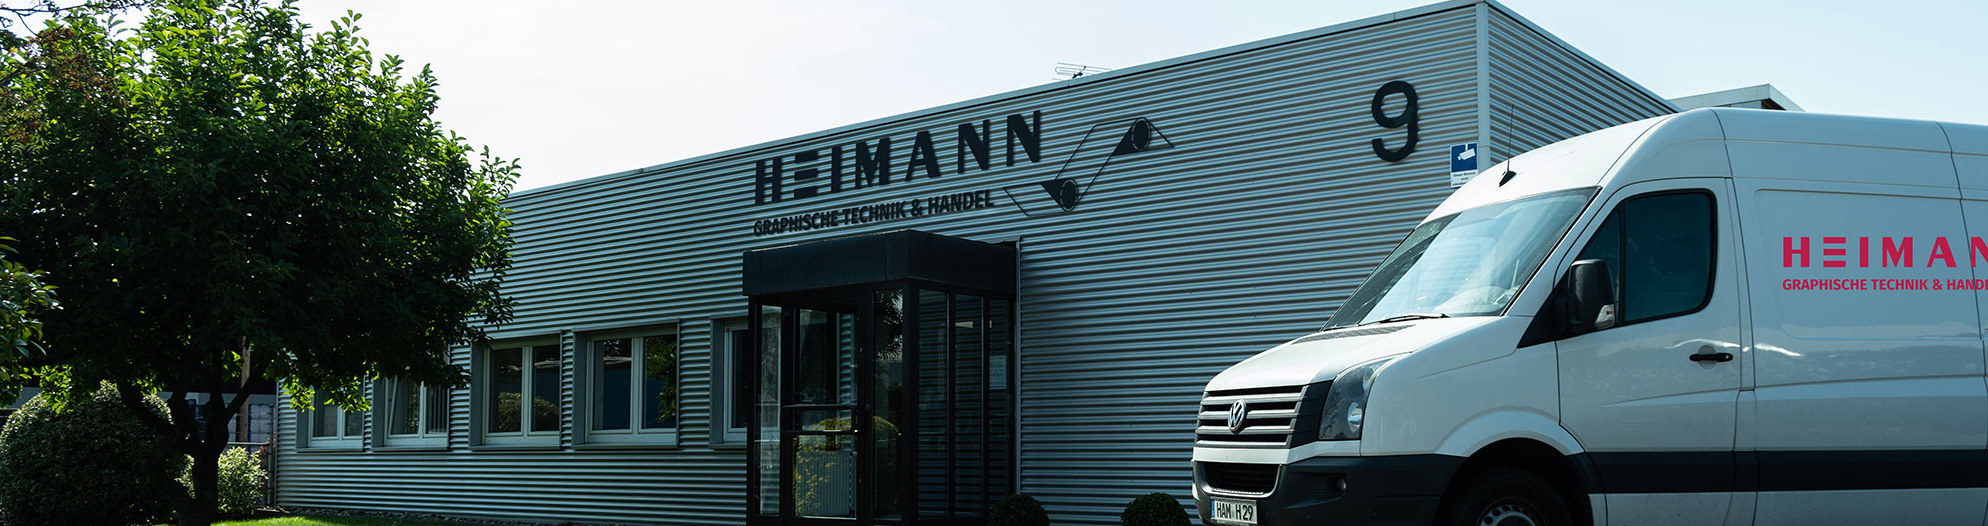 <h2>HEIMANN GmbH</h2>